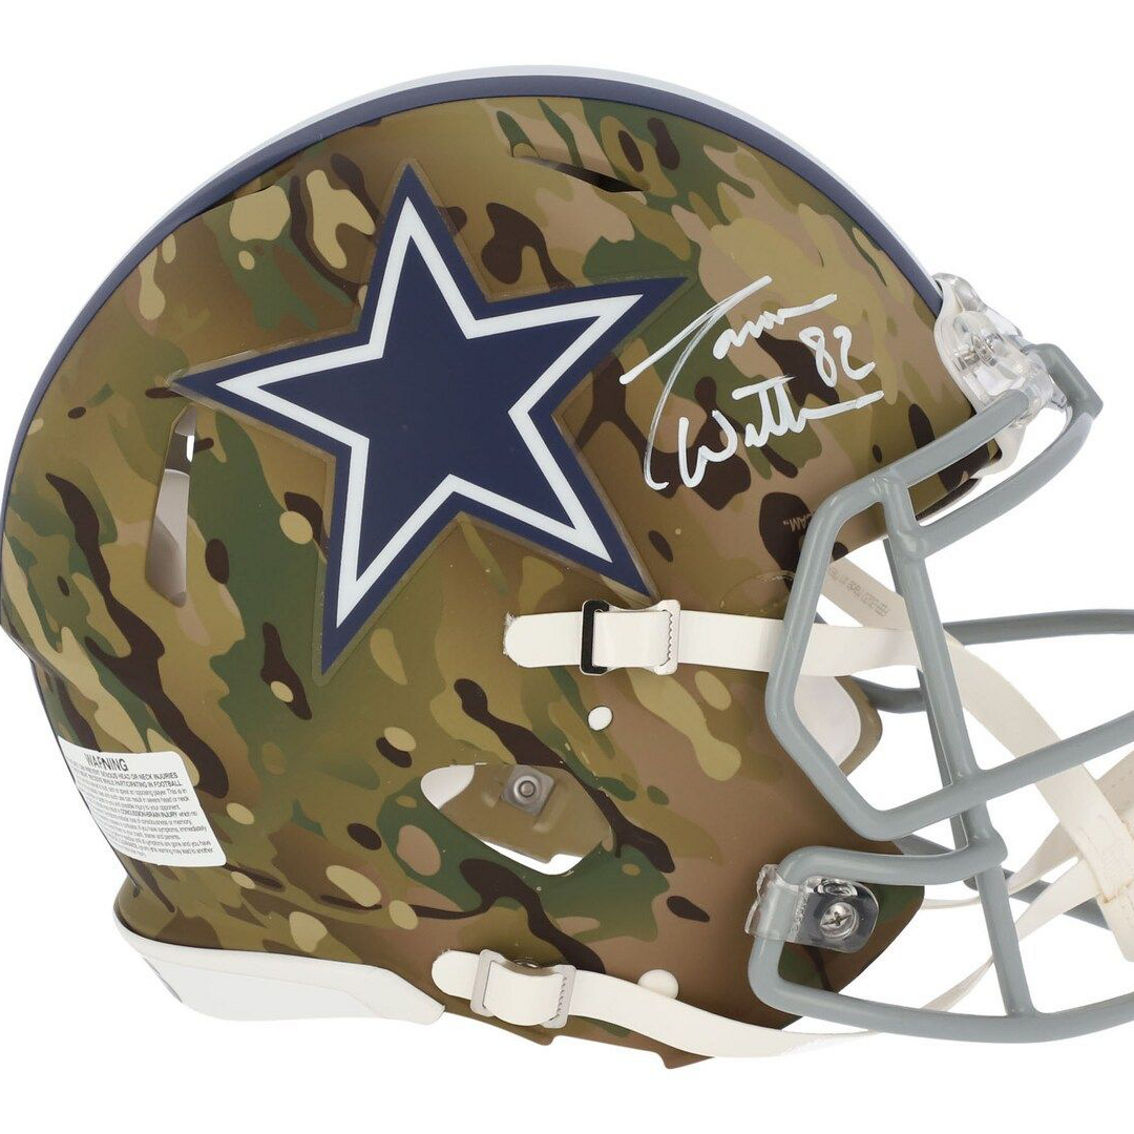 Fanatics Authentic Jason Witten Dallas Cowboys Autographed Riddell Camo Alternate Speed Authentic Helmet - Image 2 of 4